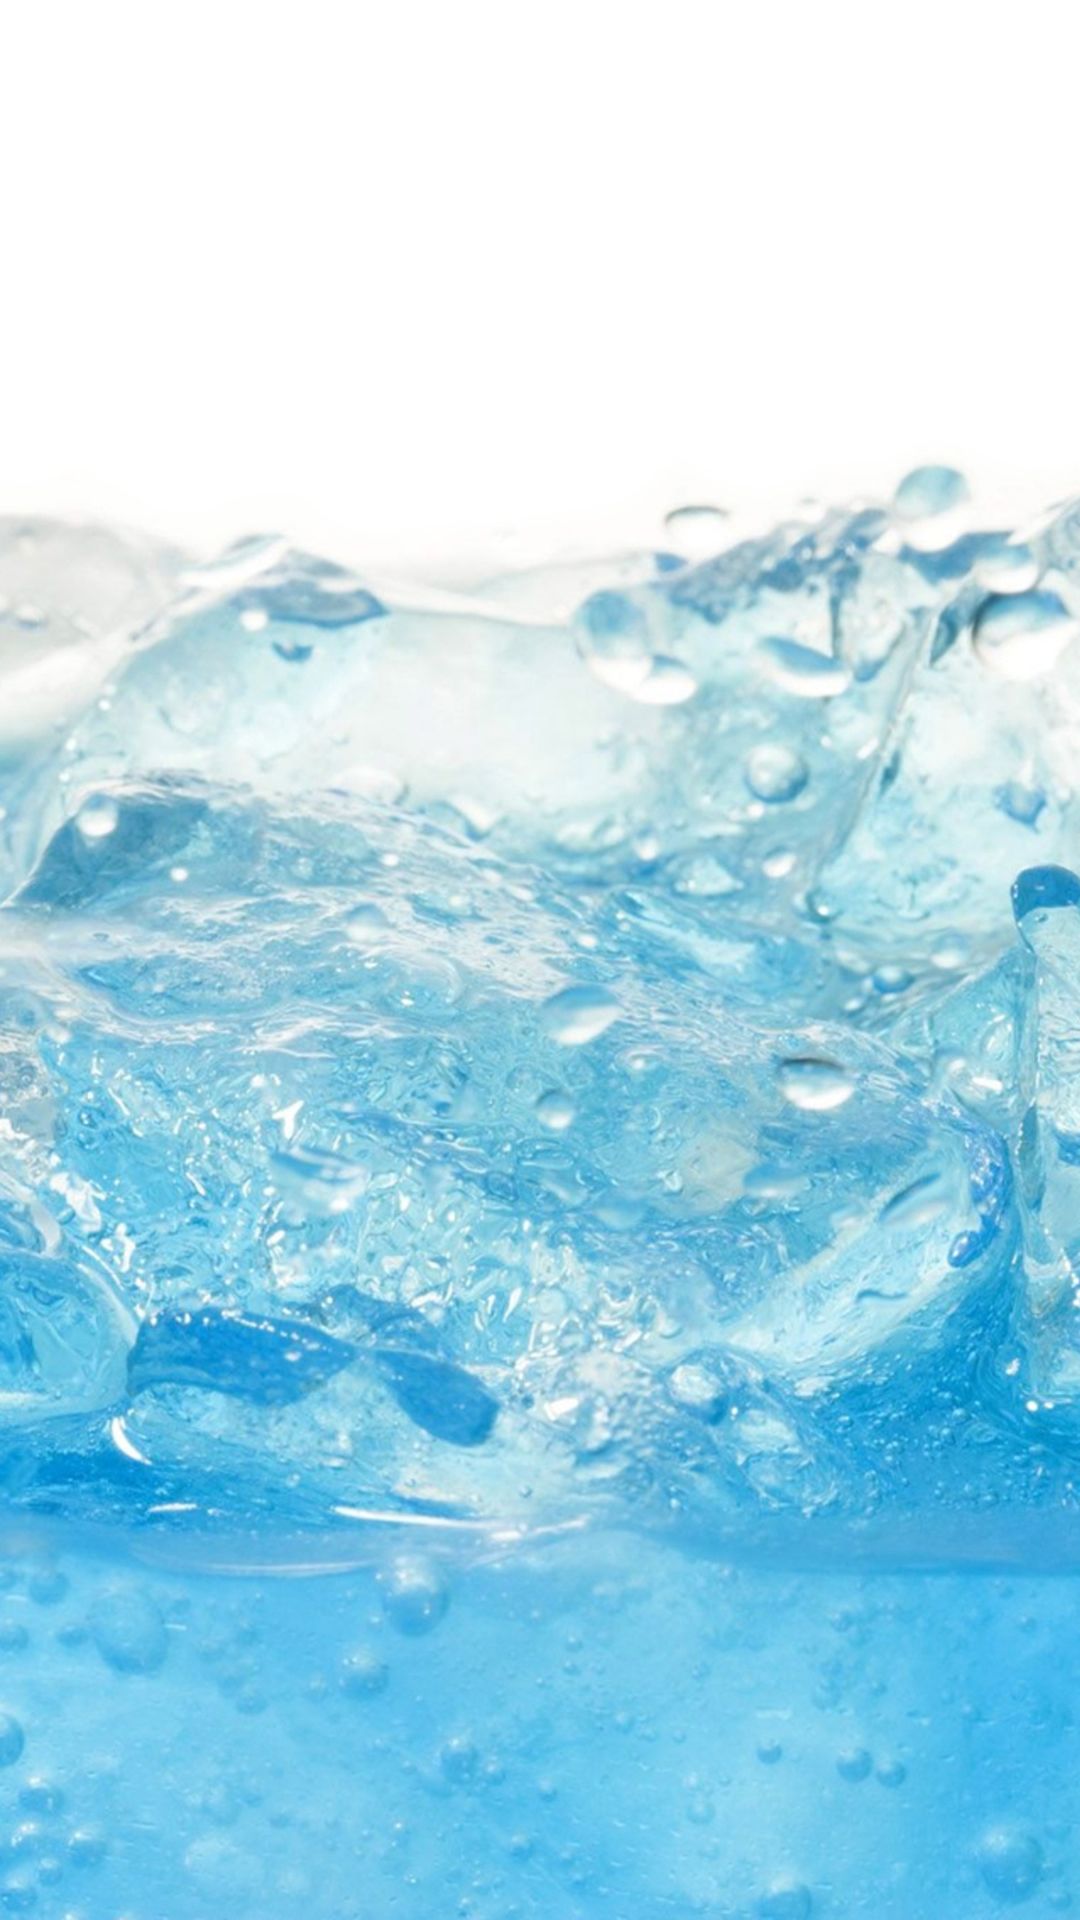 Crystal Bubble Water Splash Background iPhone Plus Wallpaper